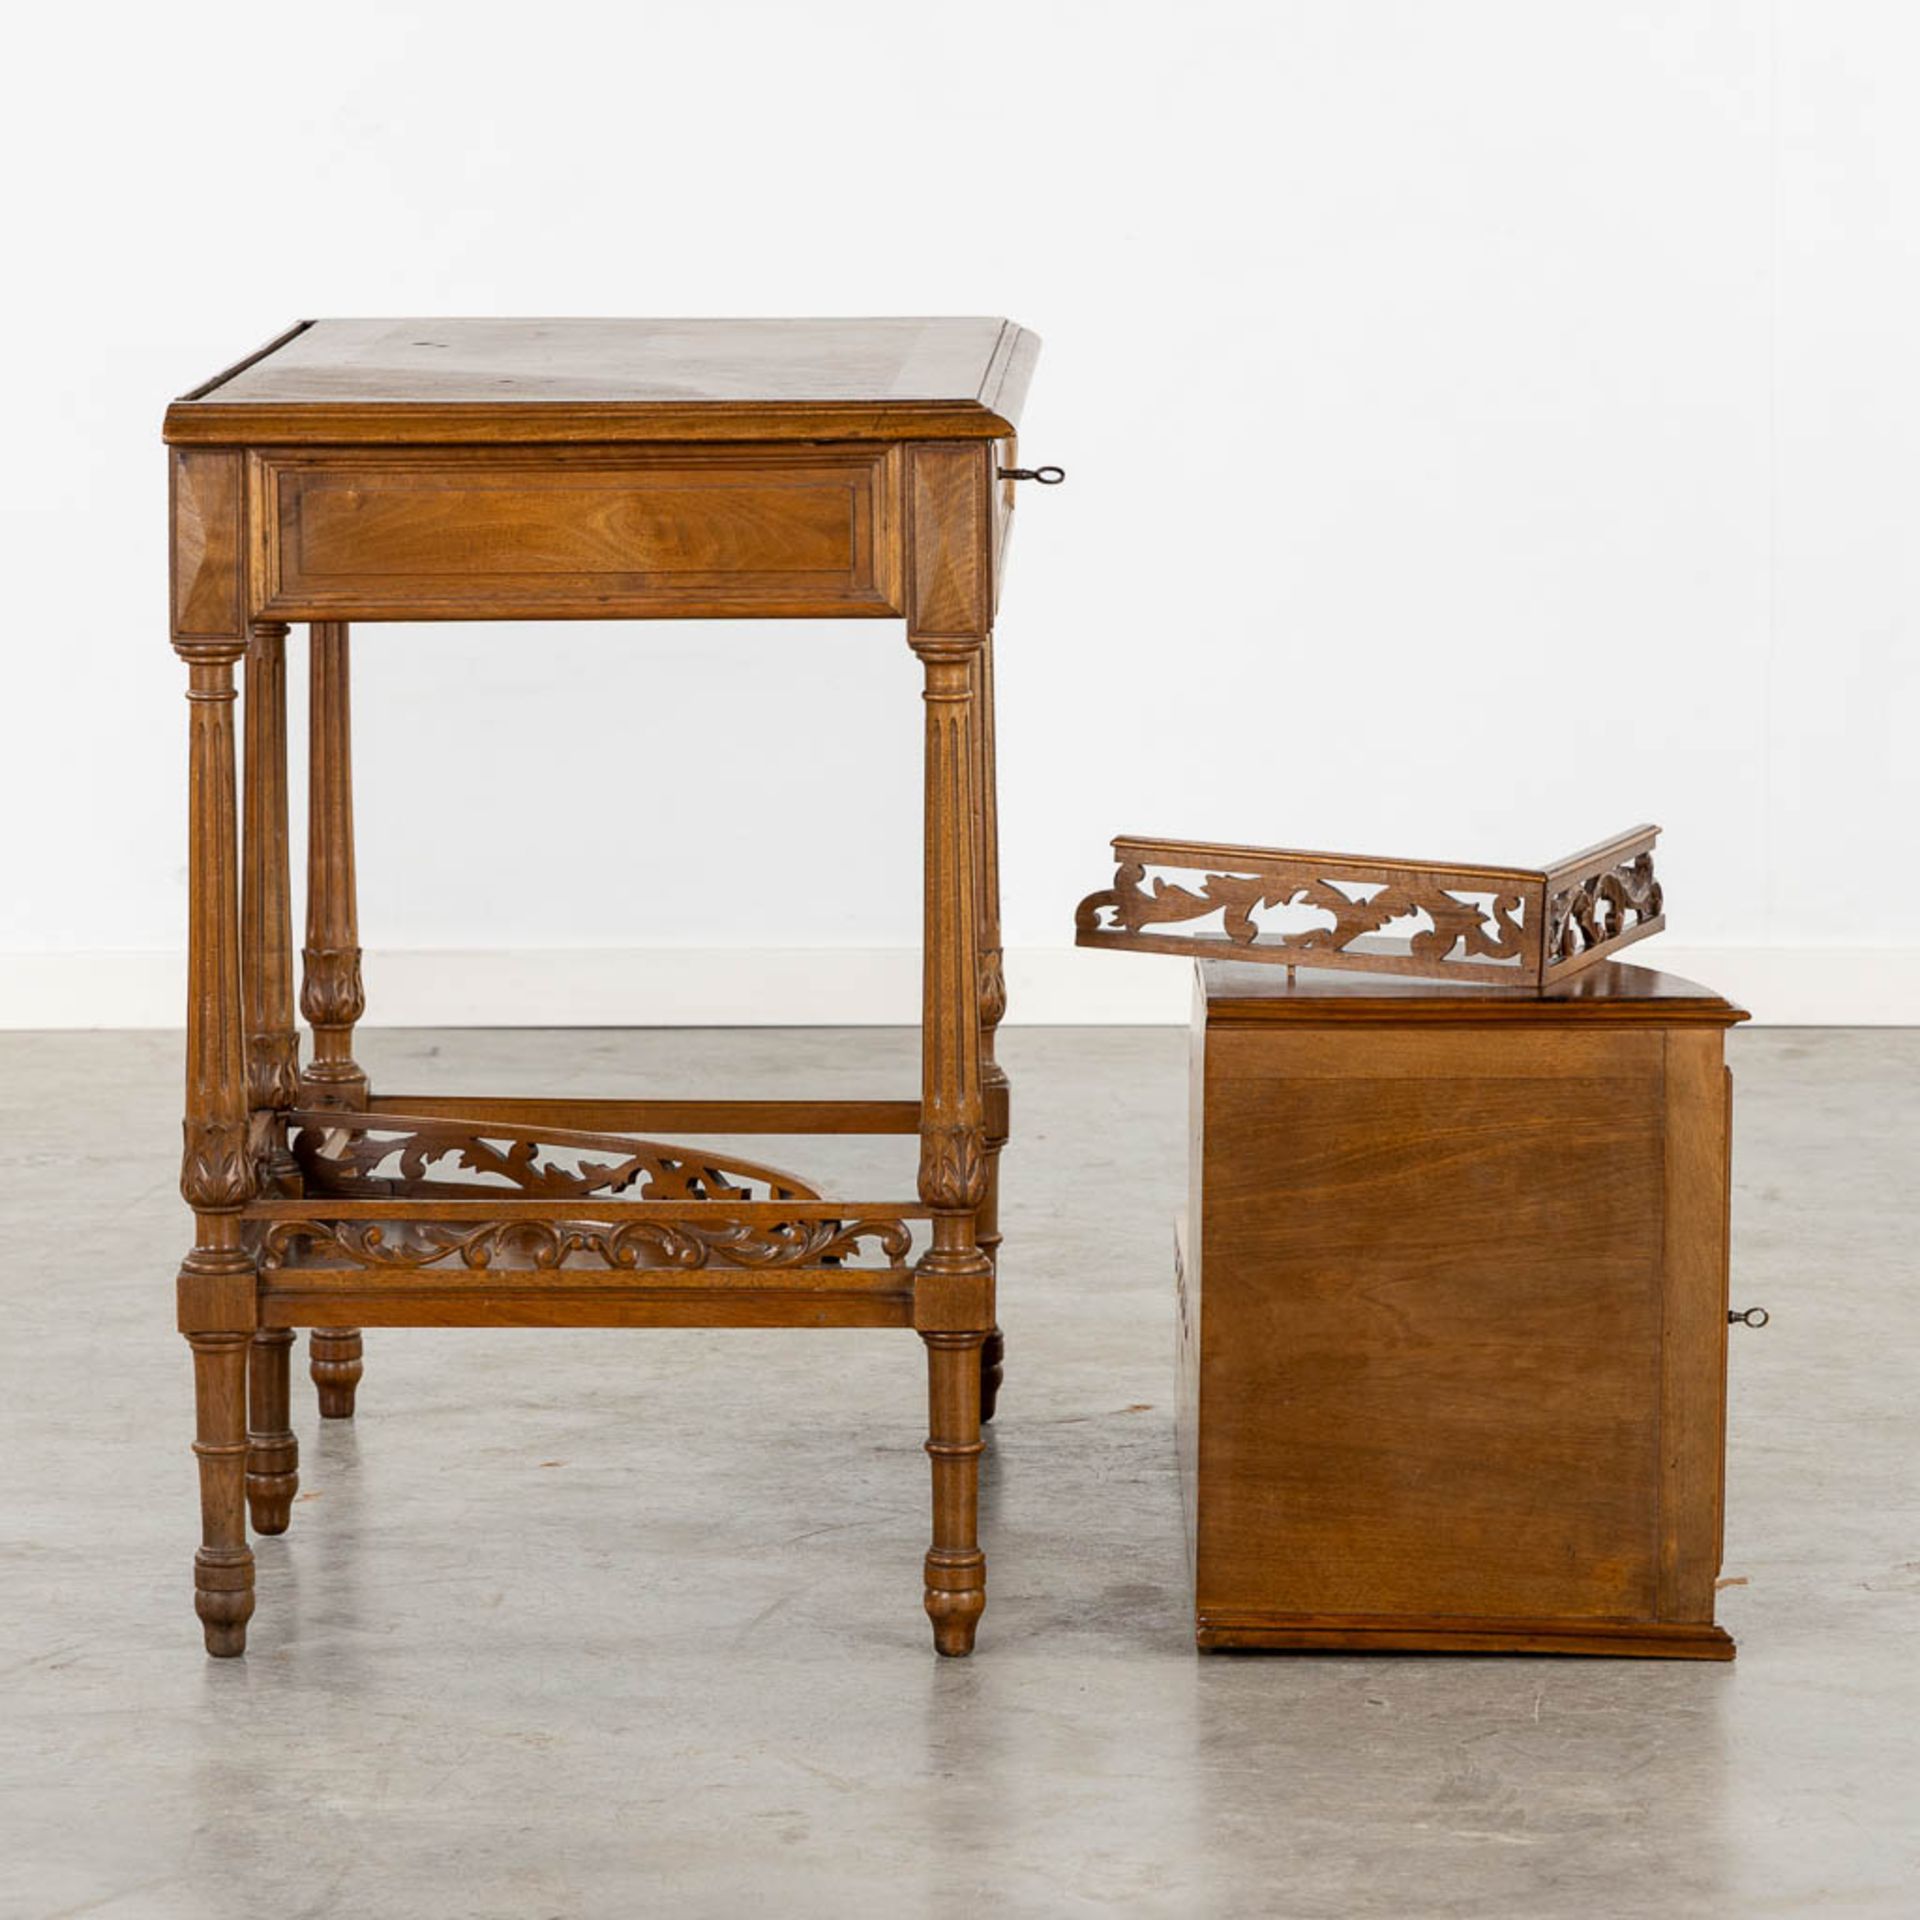 An elegant ladies' desk, walnut with marquetry inlay. 19th C. (L:50 x W:88 x H:120 cm) - Image 8 of 12